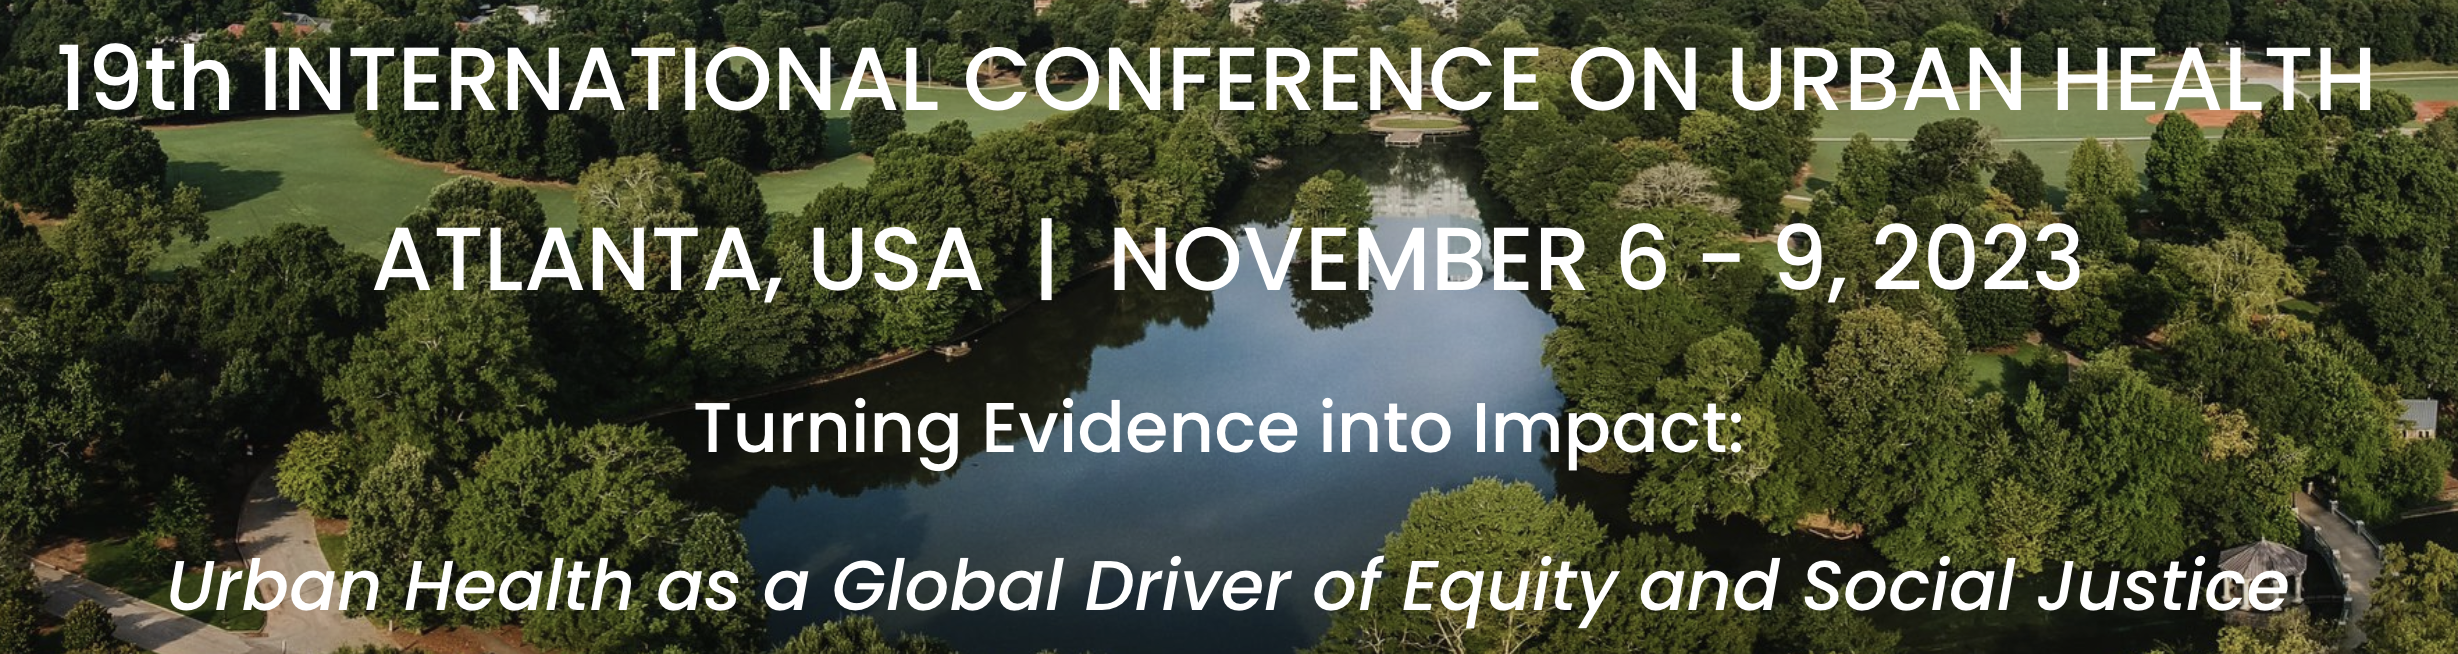 19th Internationa conference on urban health Atlanta, USA | November 6-9,2023 event banner